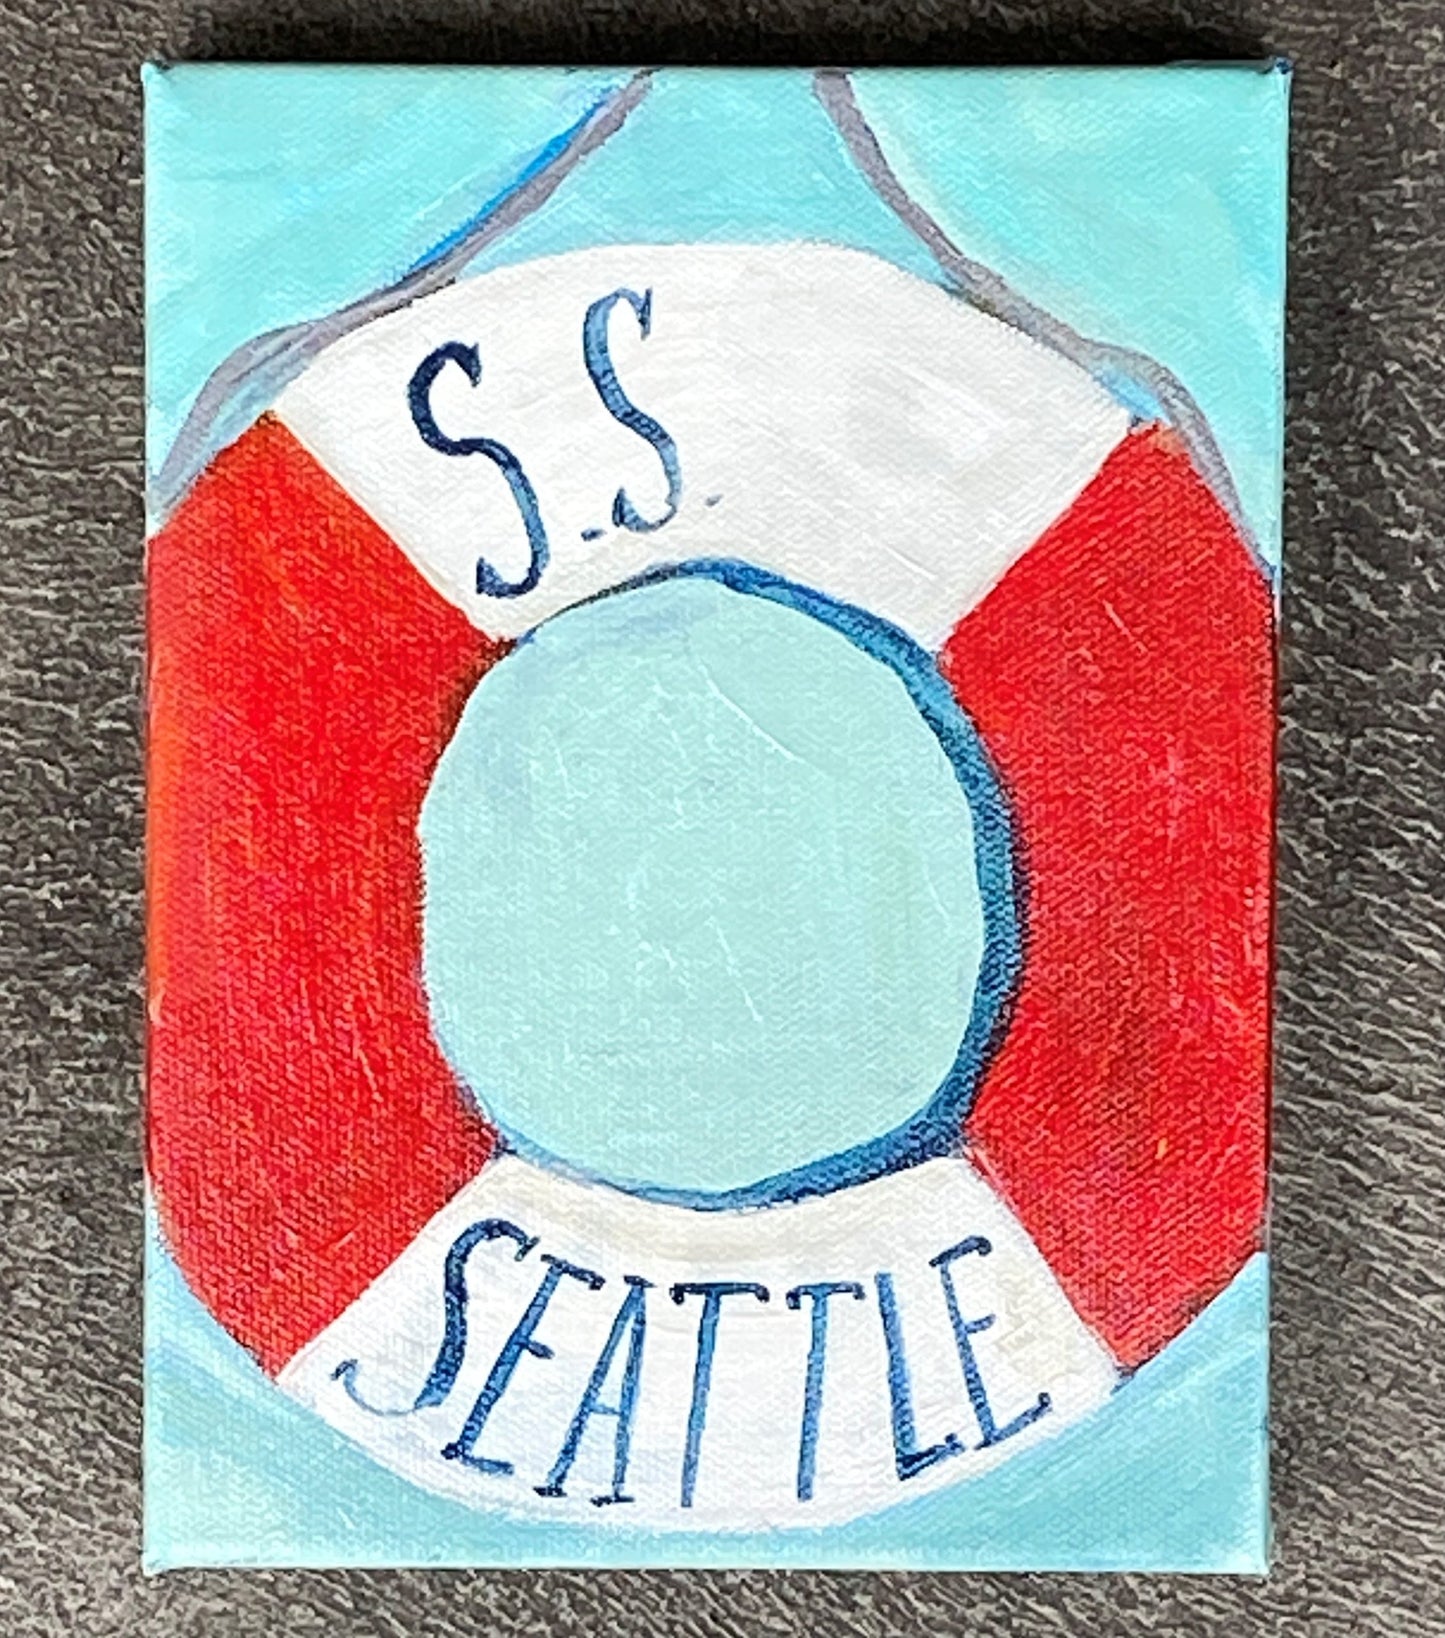 SS Seattle Life Ring, Mindy Carpenter